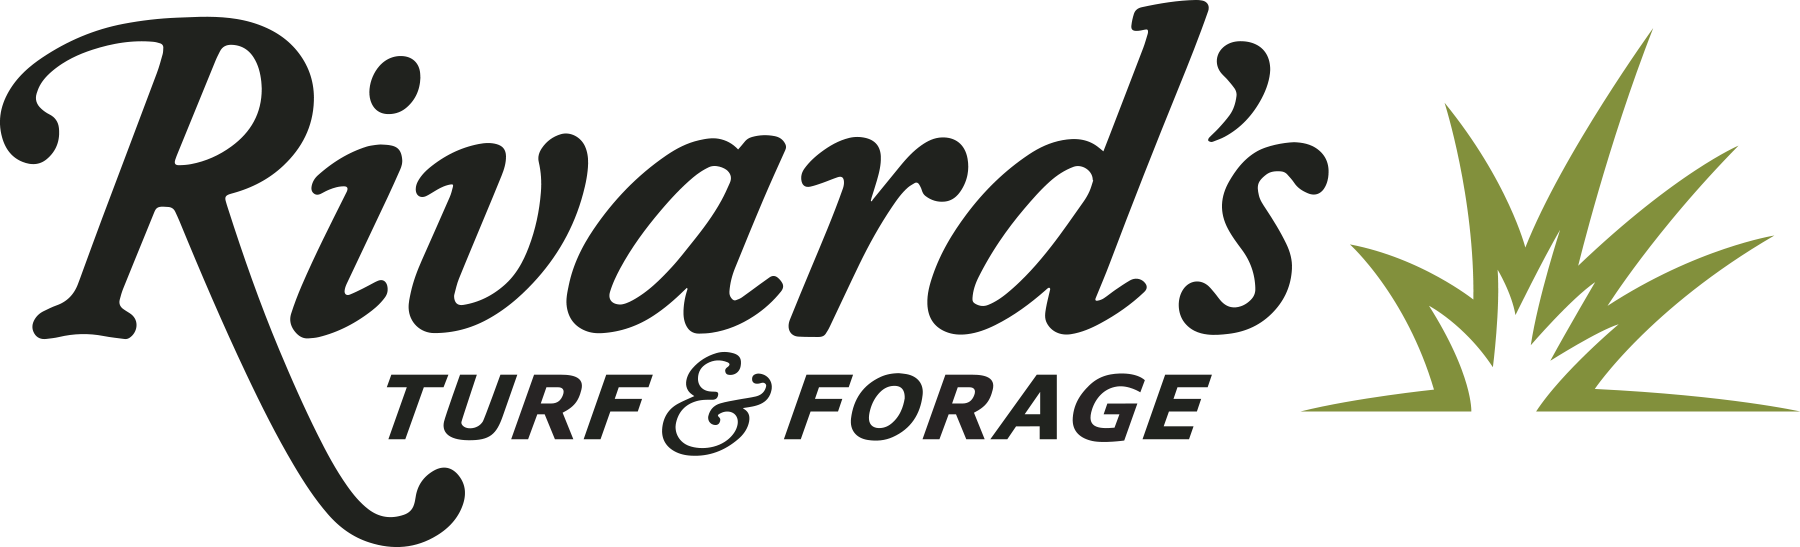 Rivard's Turf & Forage Logo